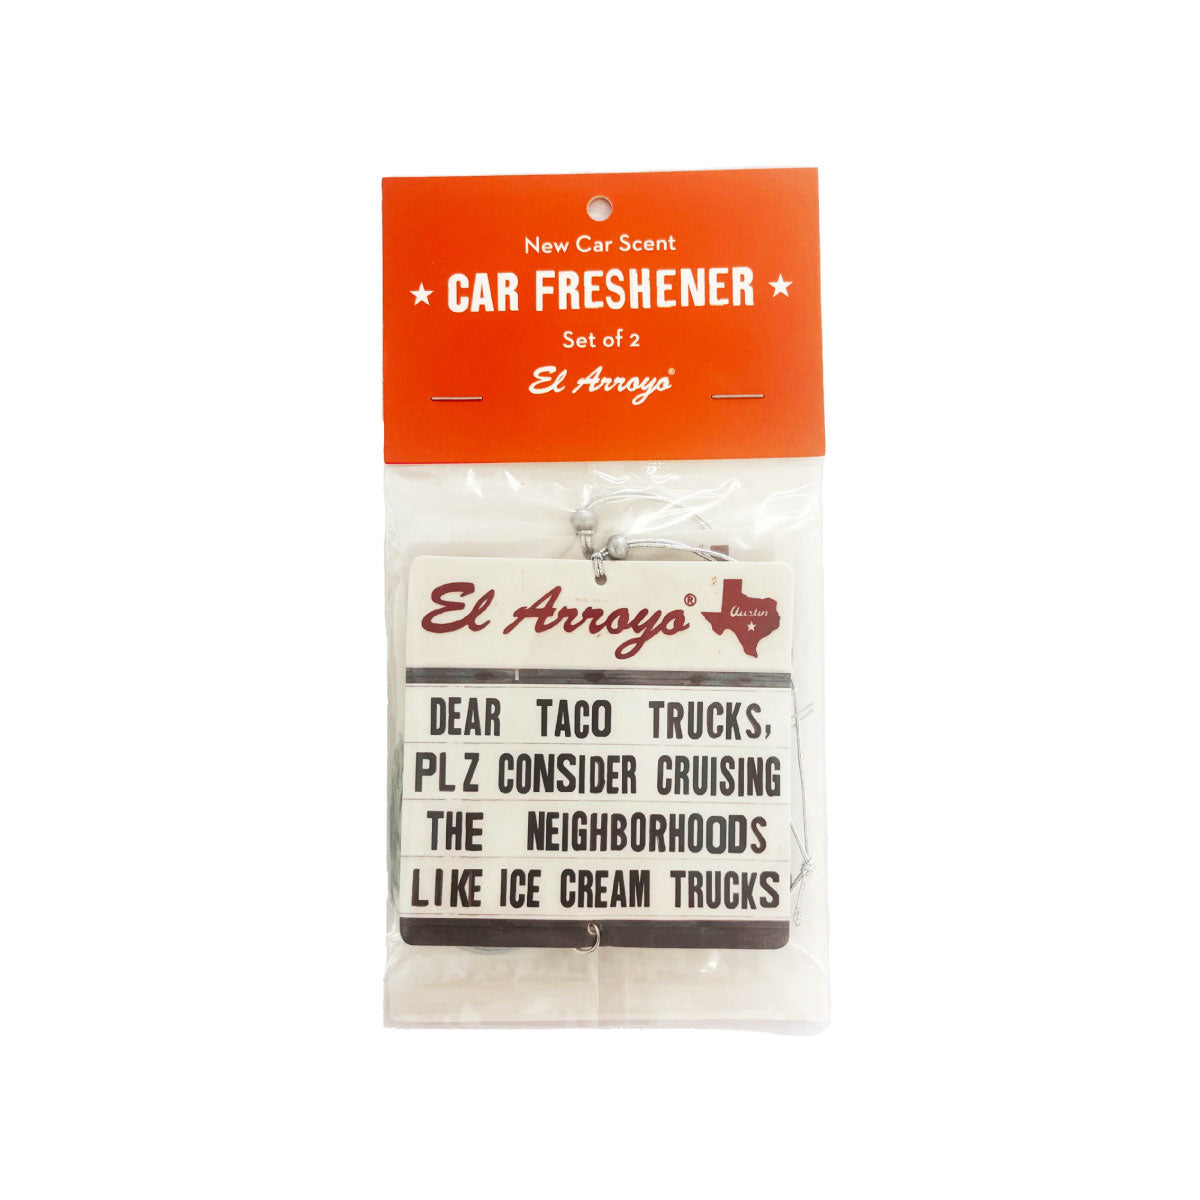 El Arroyo Car Fresheners - Dear Taco Trucks